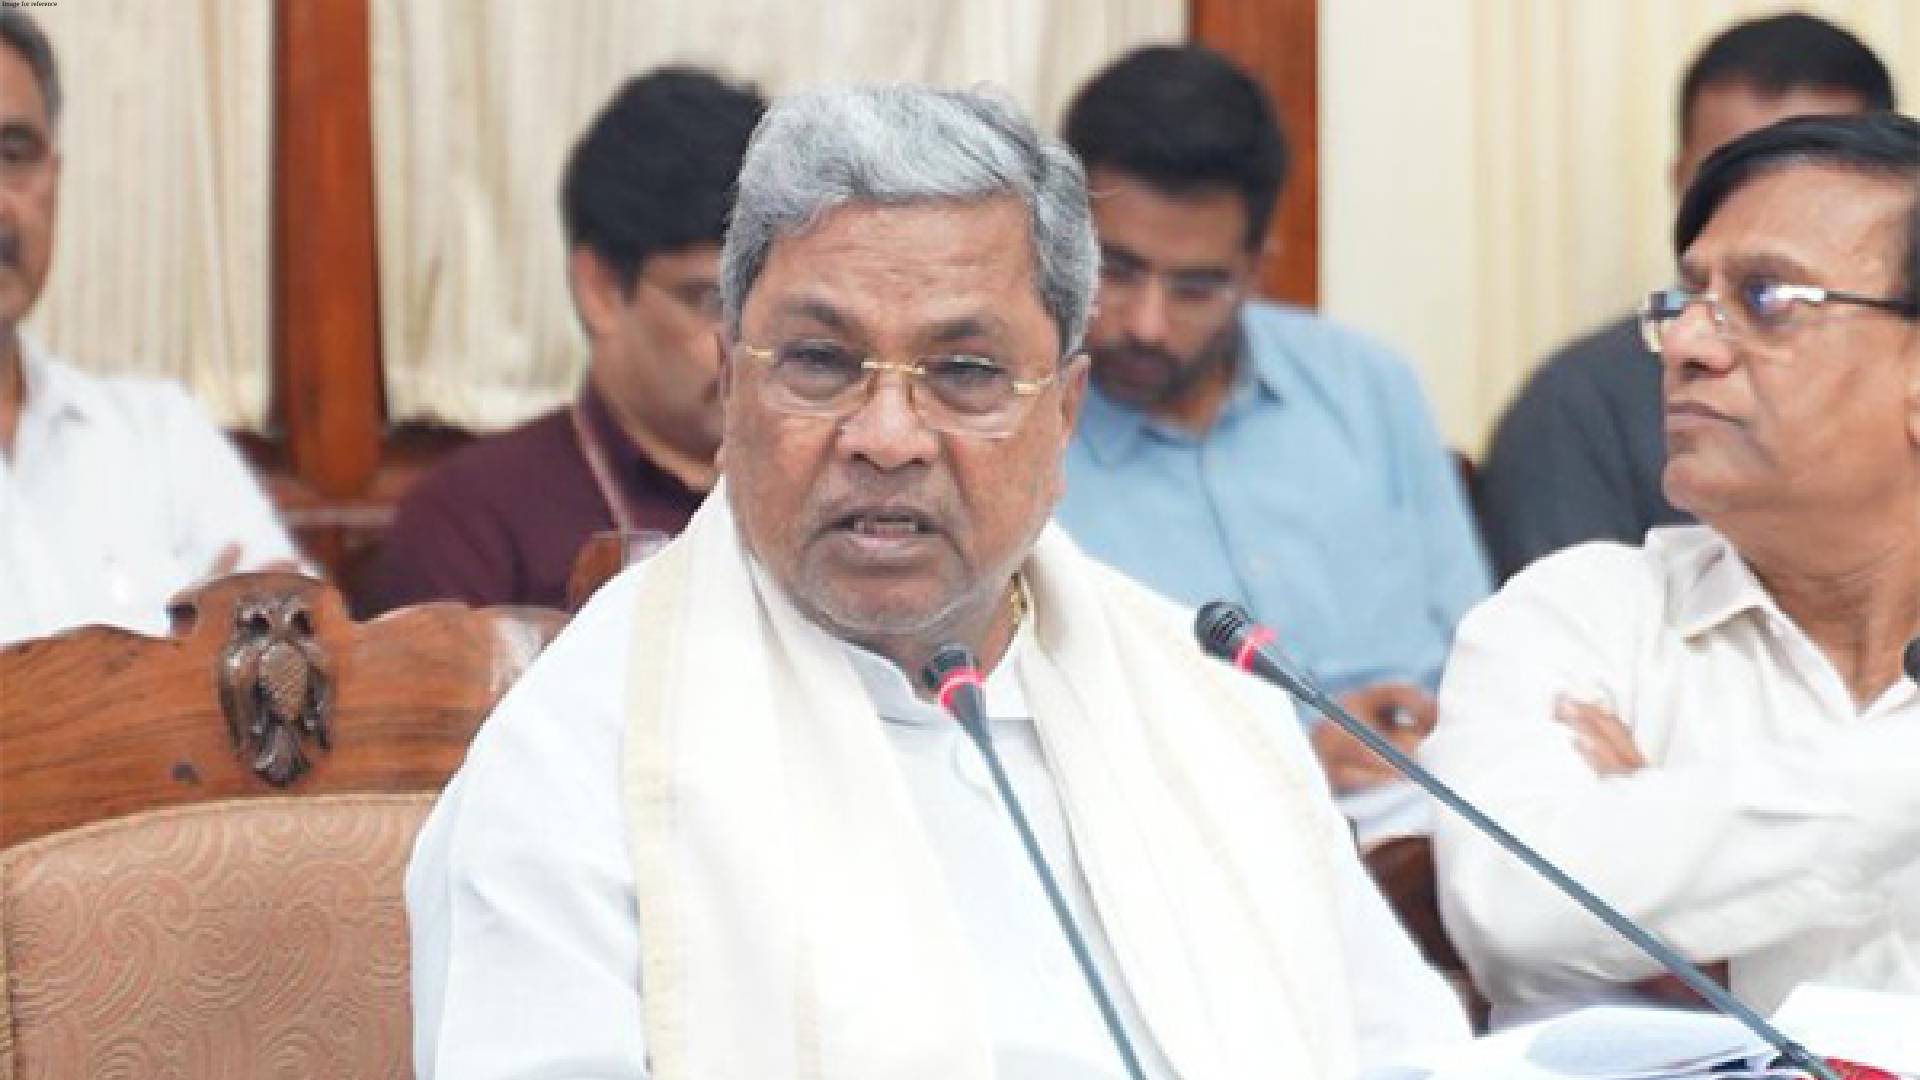 Karnataka passes resolution against NEET exam, wants CET back